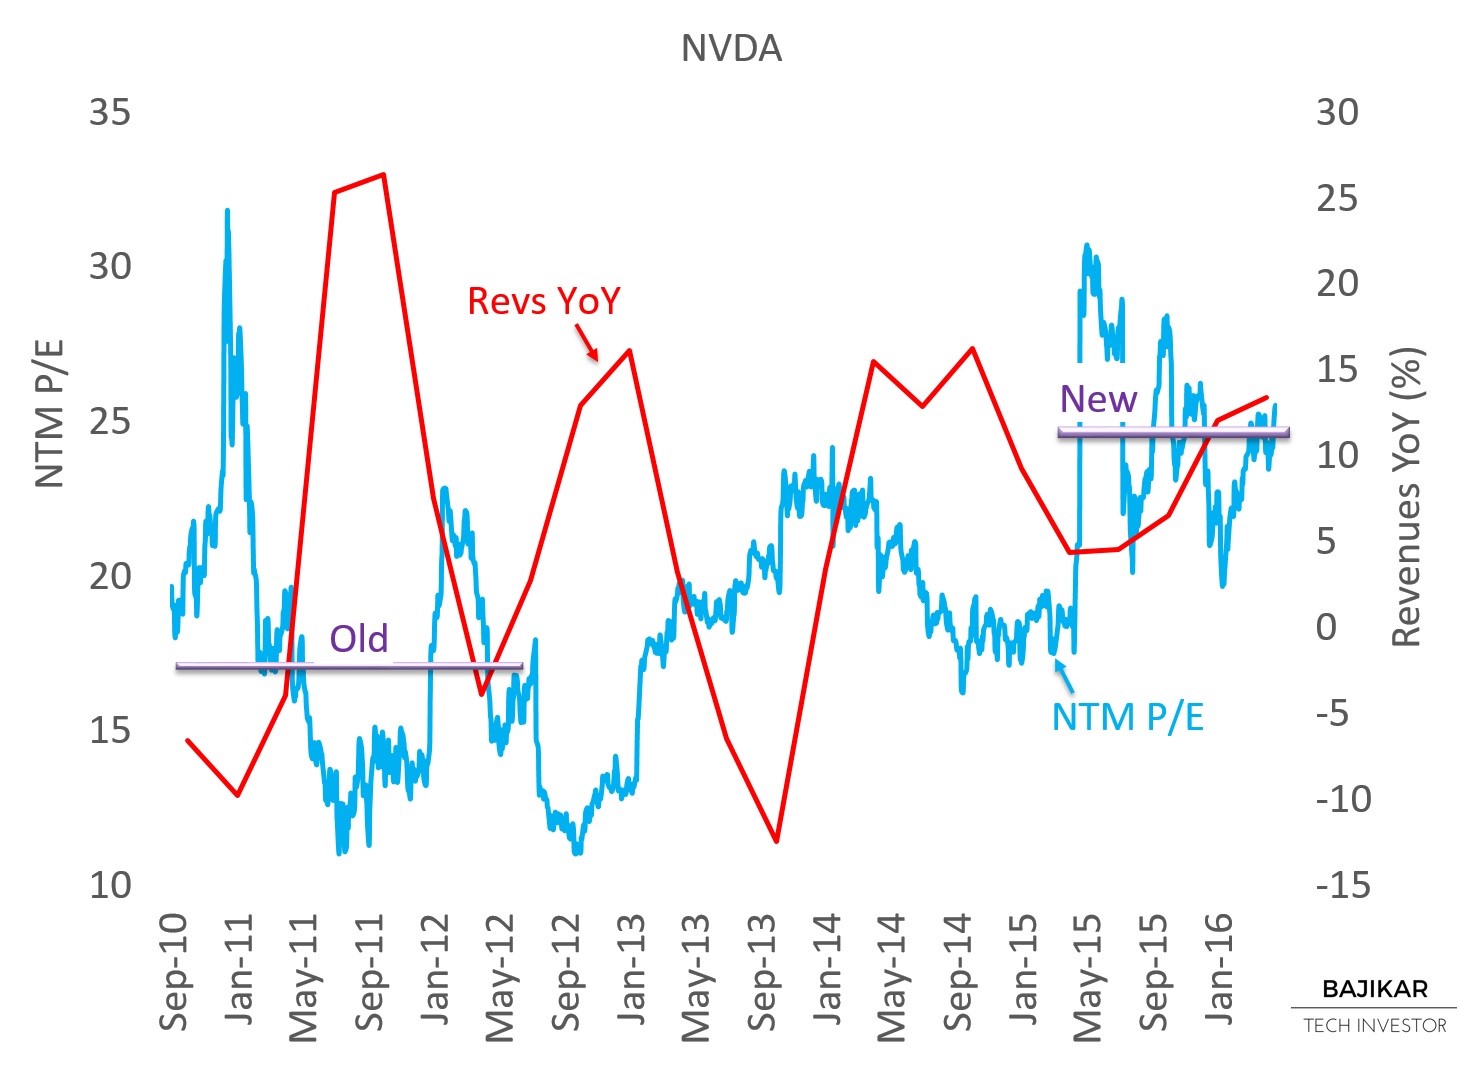 NVDA NTM P/E vs. YoY Revenues